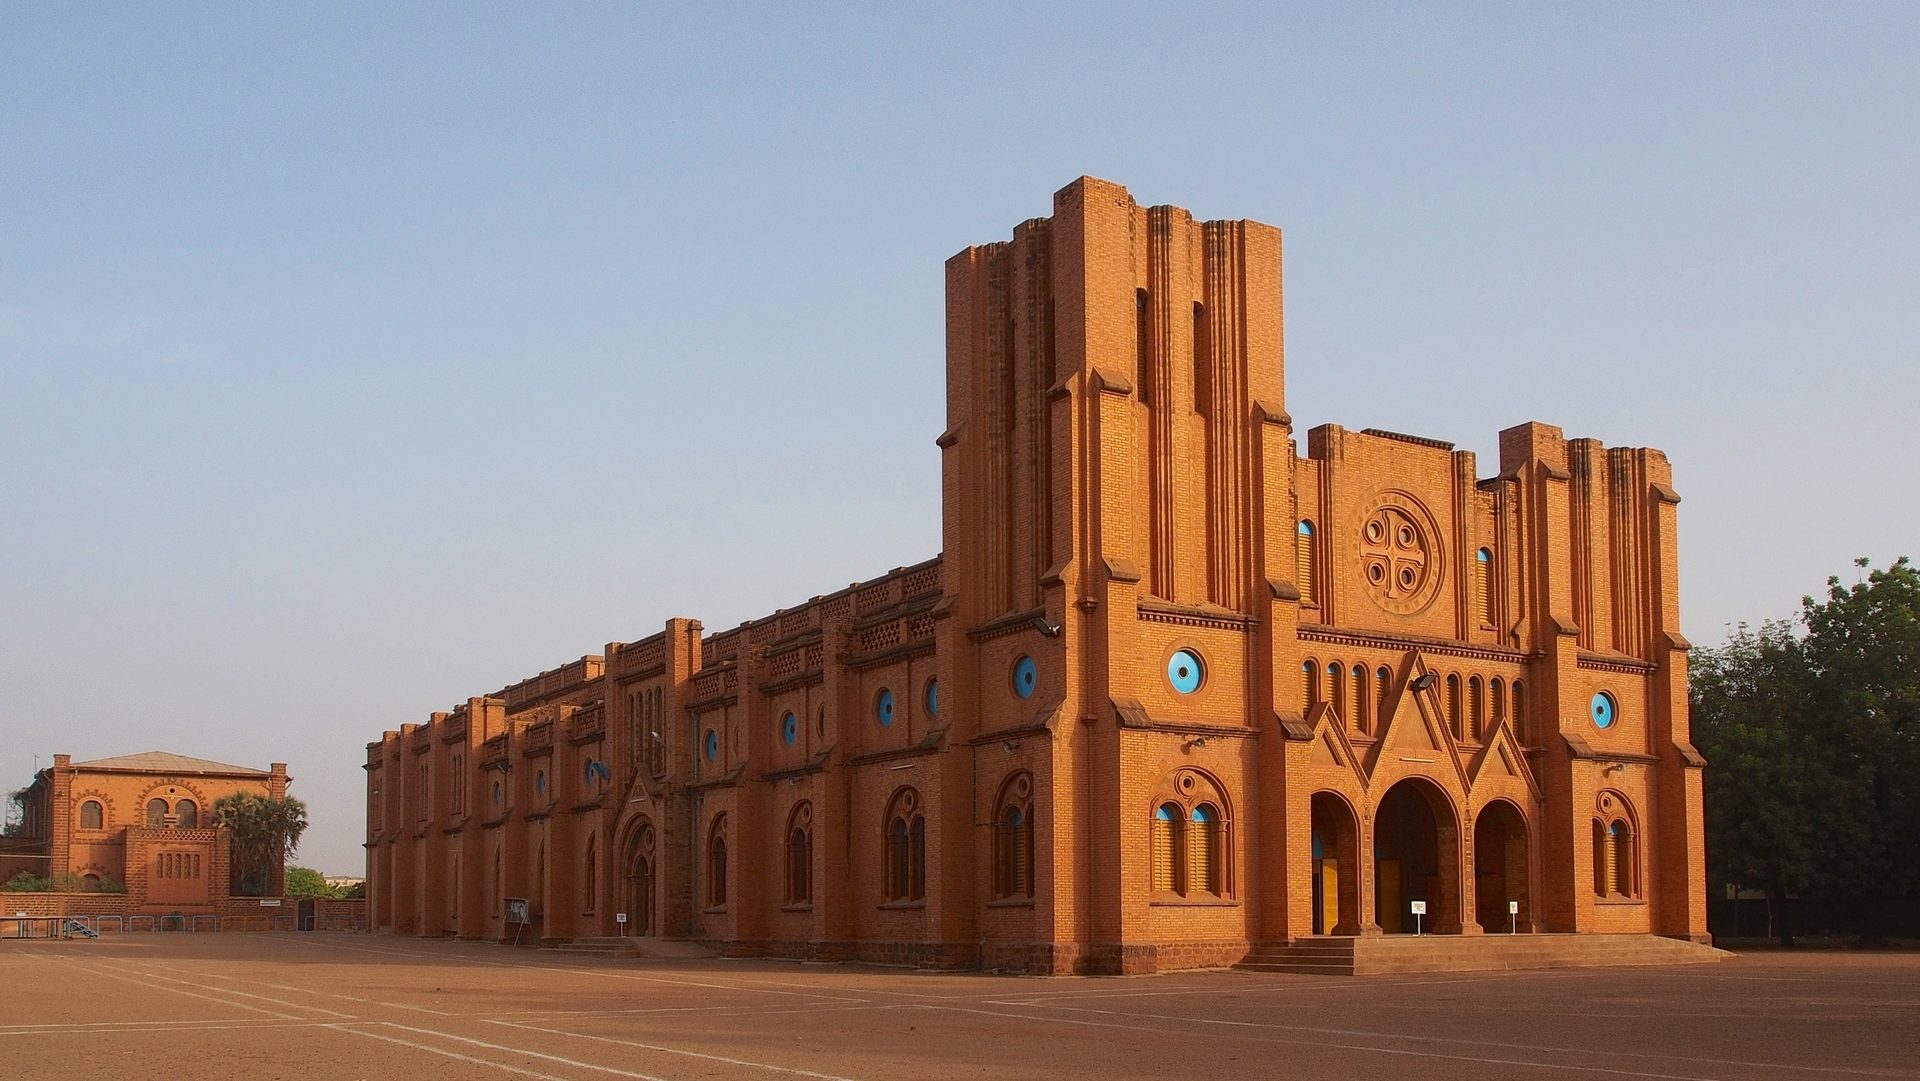 La cathédrale de Ouagadougou, au Burkina Faso (photo wikimedia commons Sputniktilt CC BY-SA 3.0)